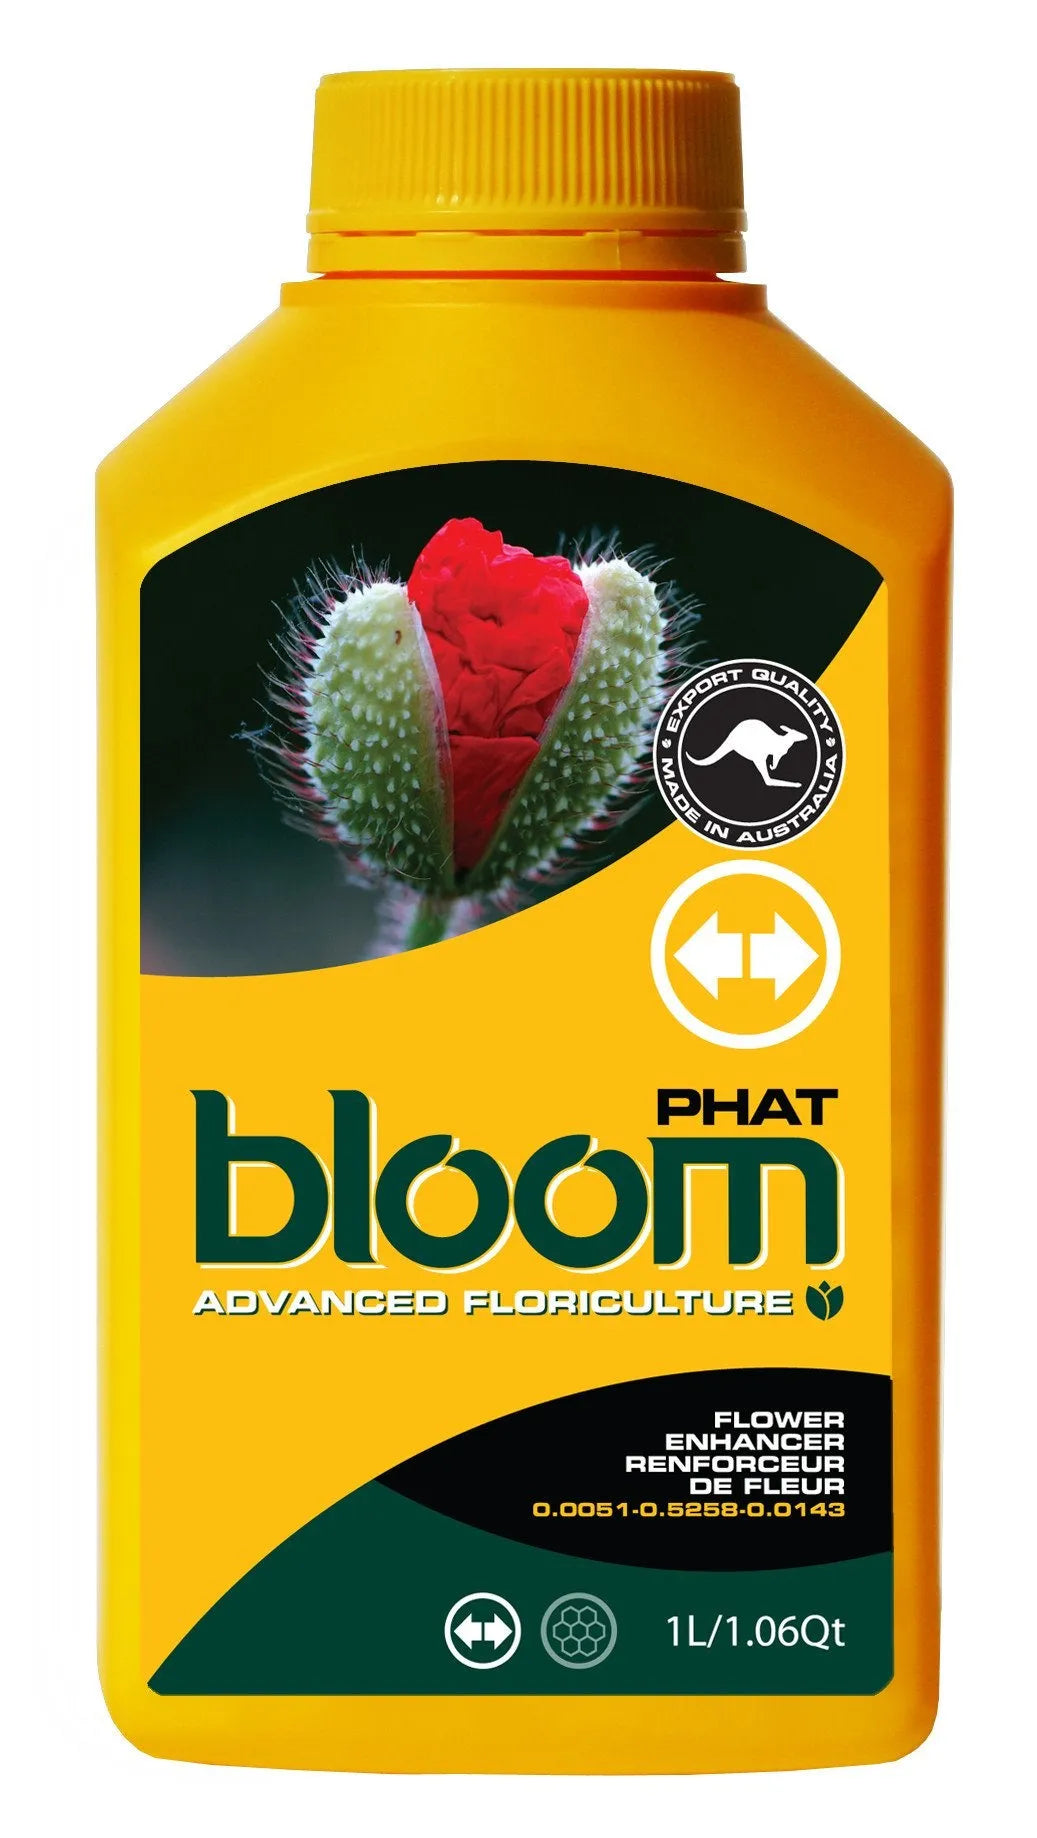 Bloom Yellow Bottle - Phat